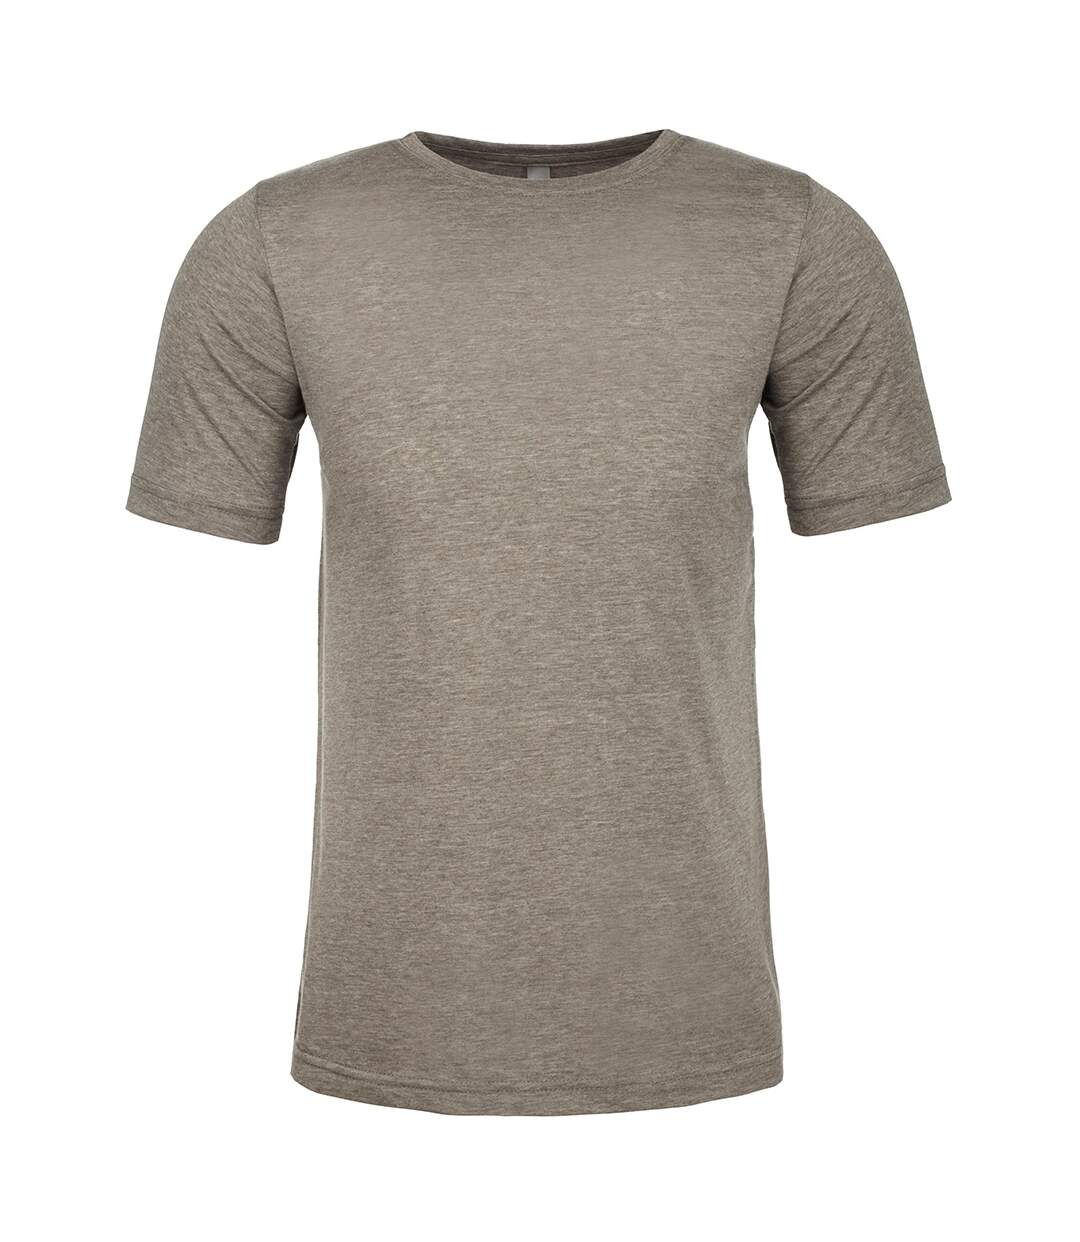 Next Level - T-shirt - Homme (Anthracite) - UTPC4182